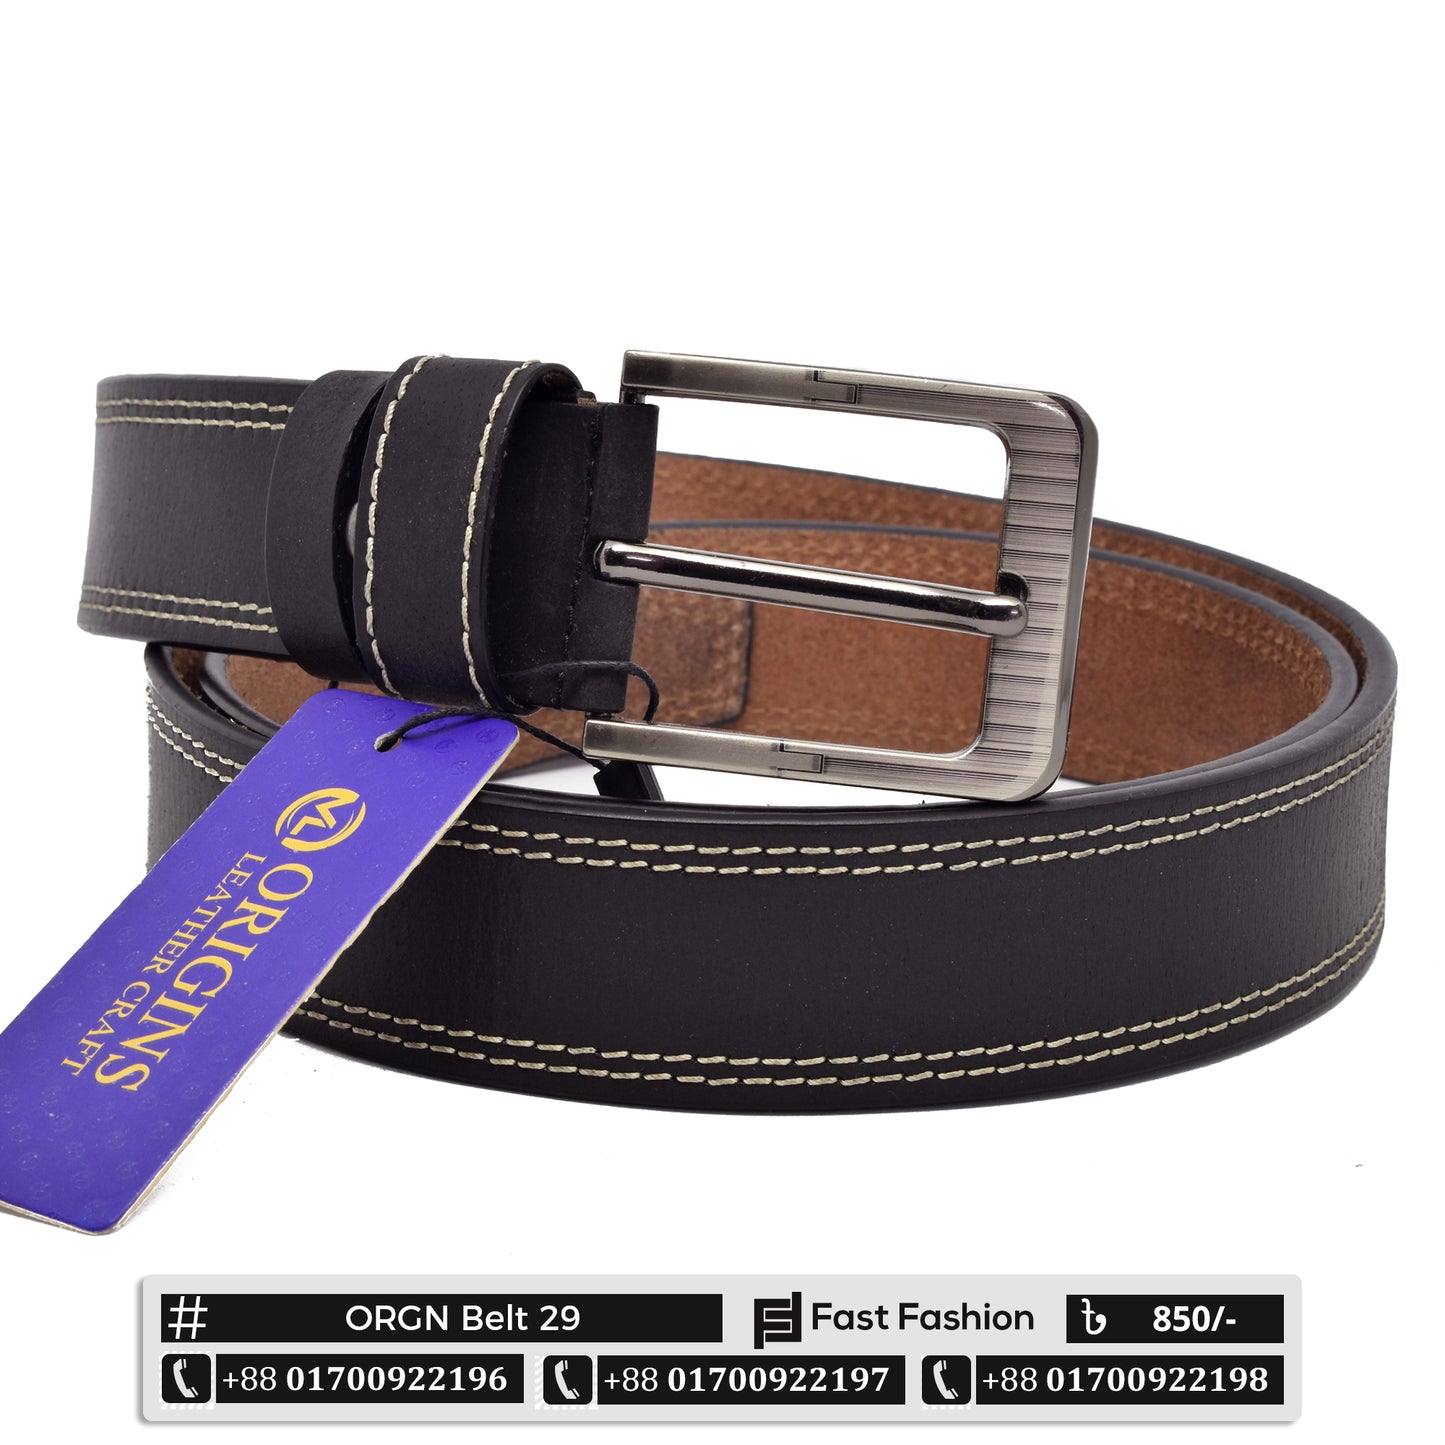 Stylish Premium Quality Original Leather Belt - ORGN Belt 29